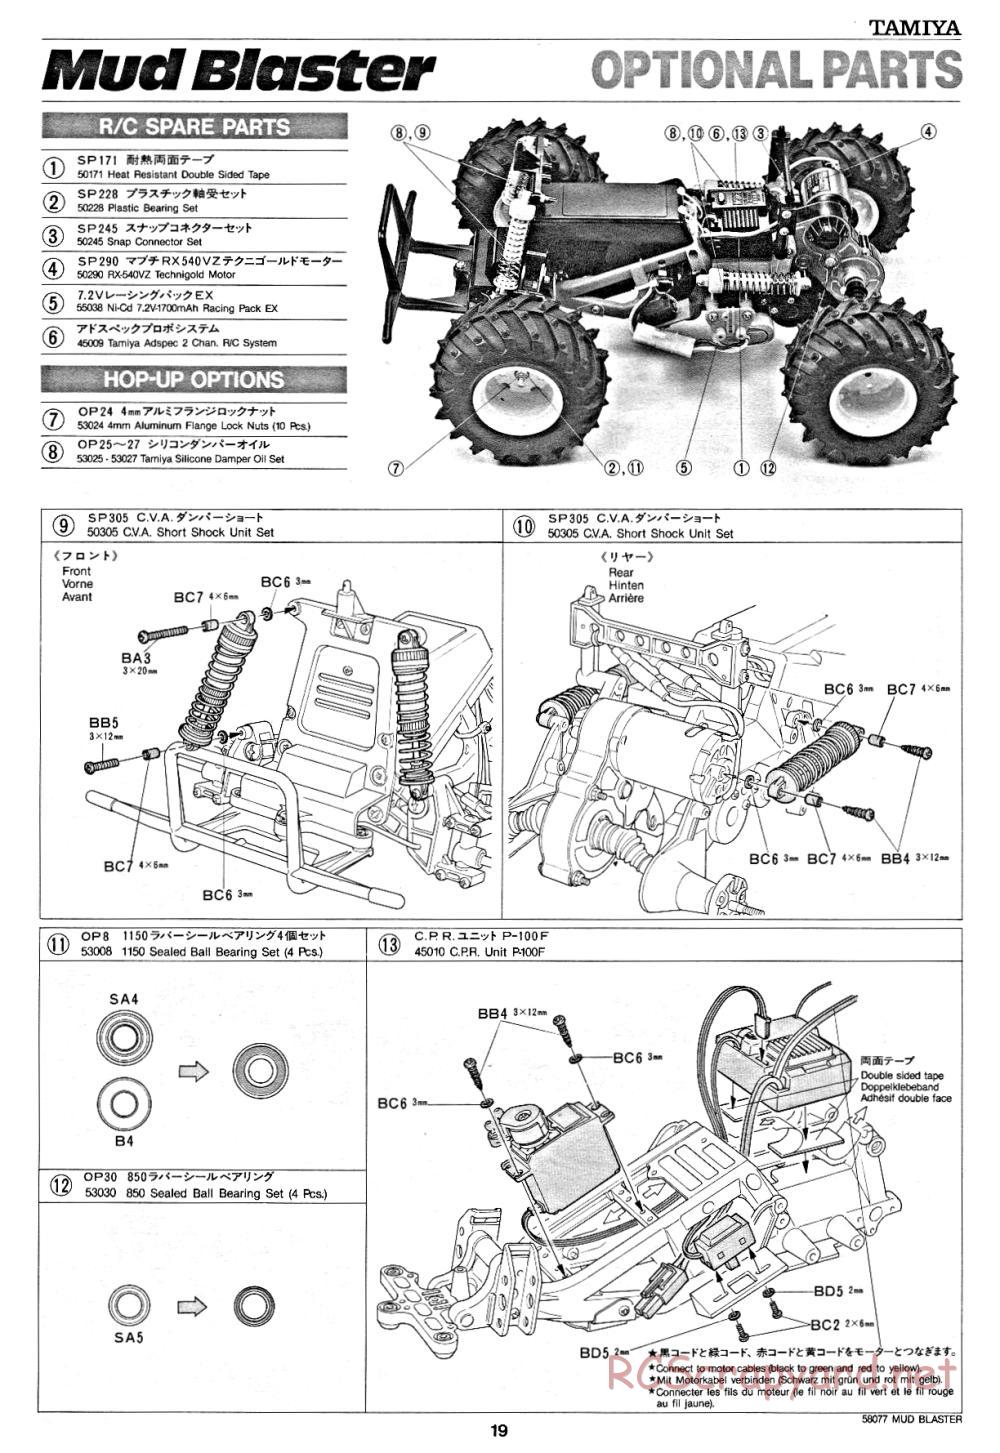 Tamiya - Mud Blaster - 58077 - Manual - Page 19